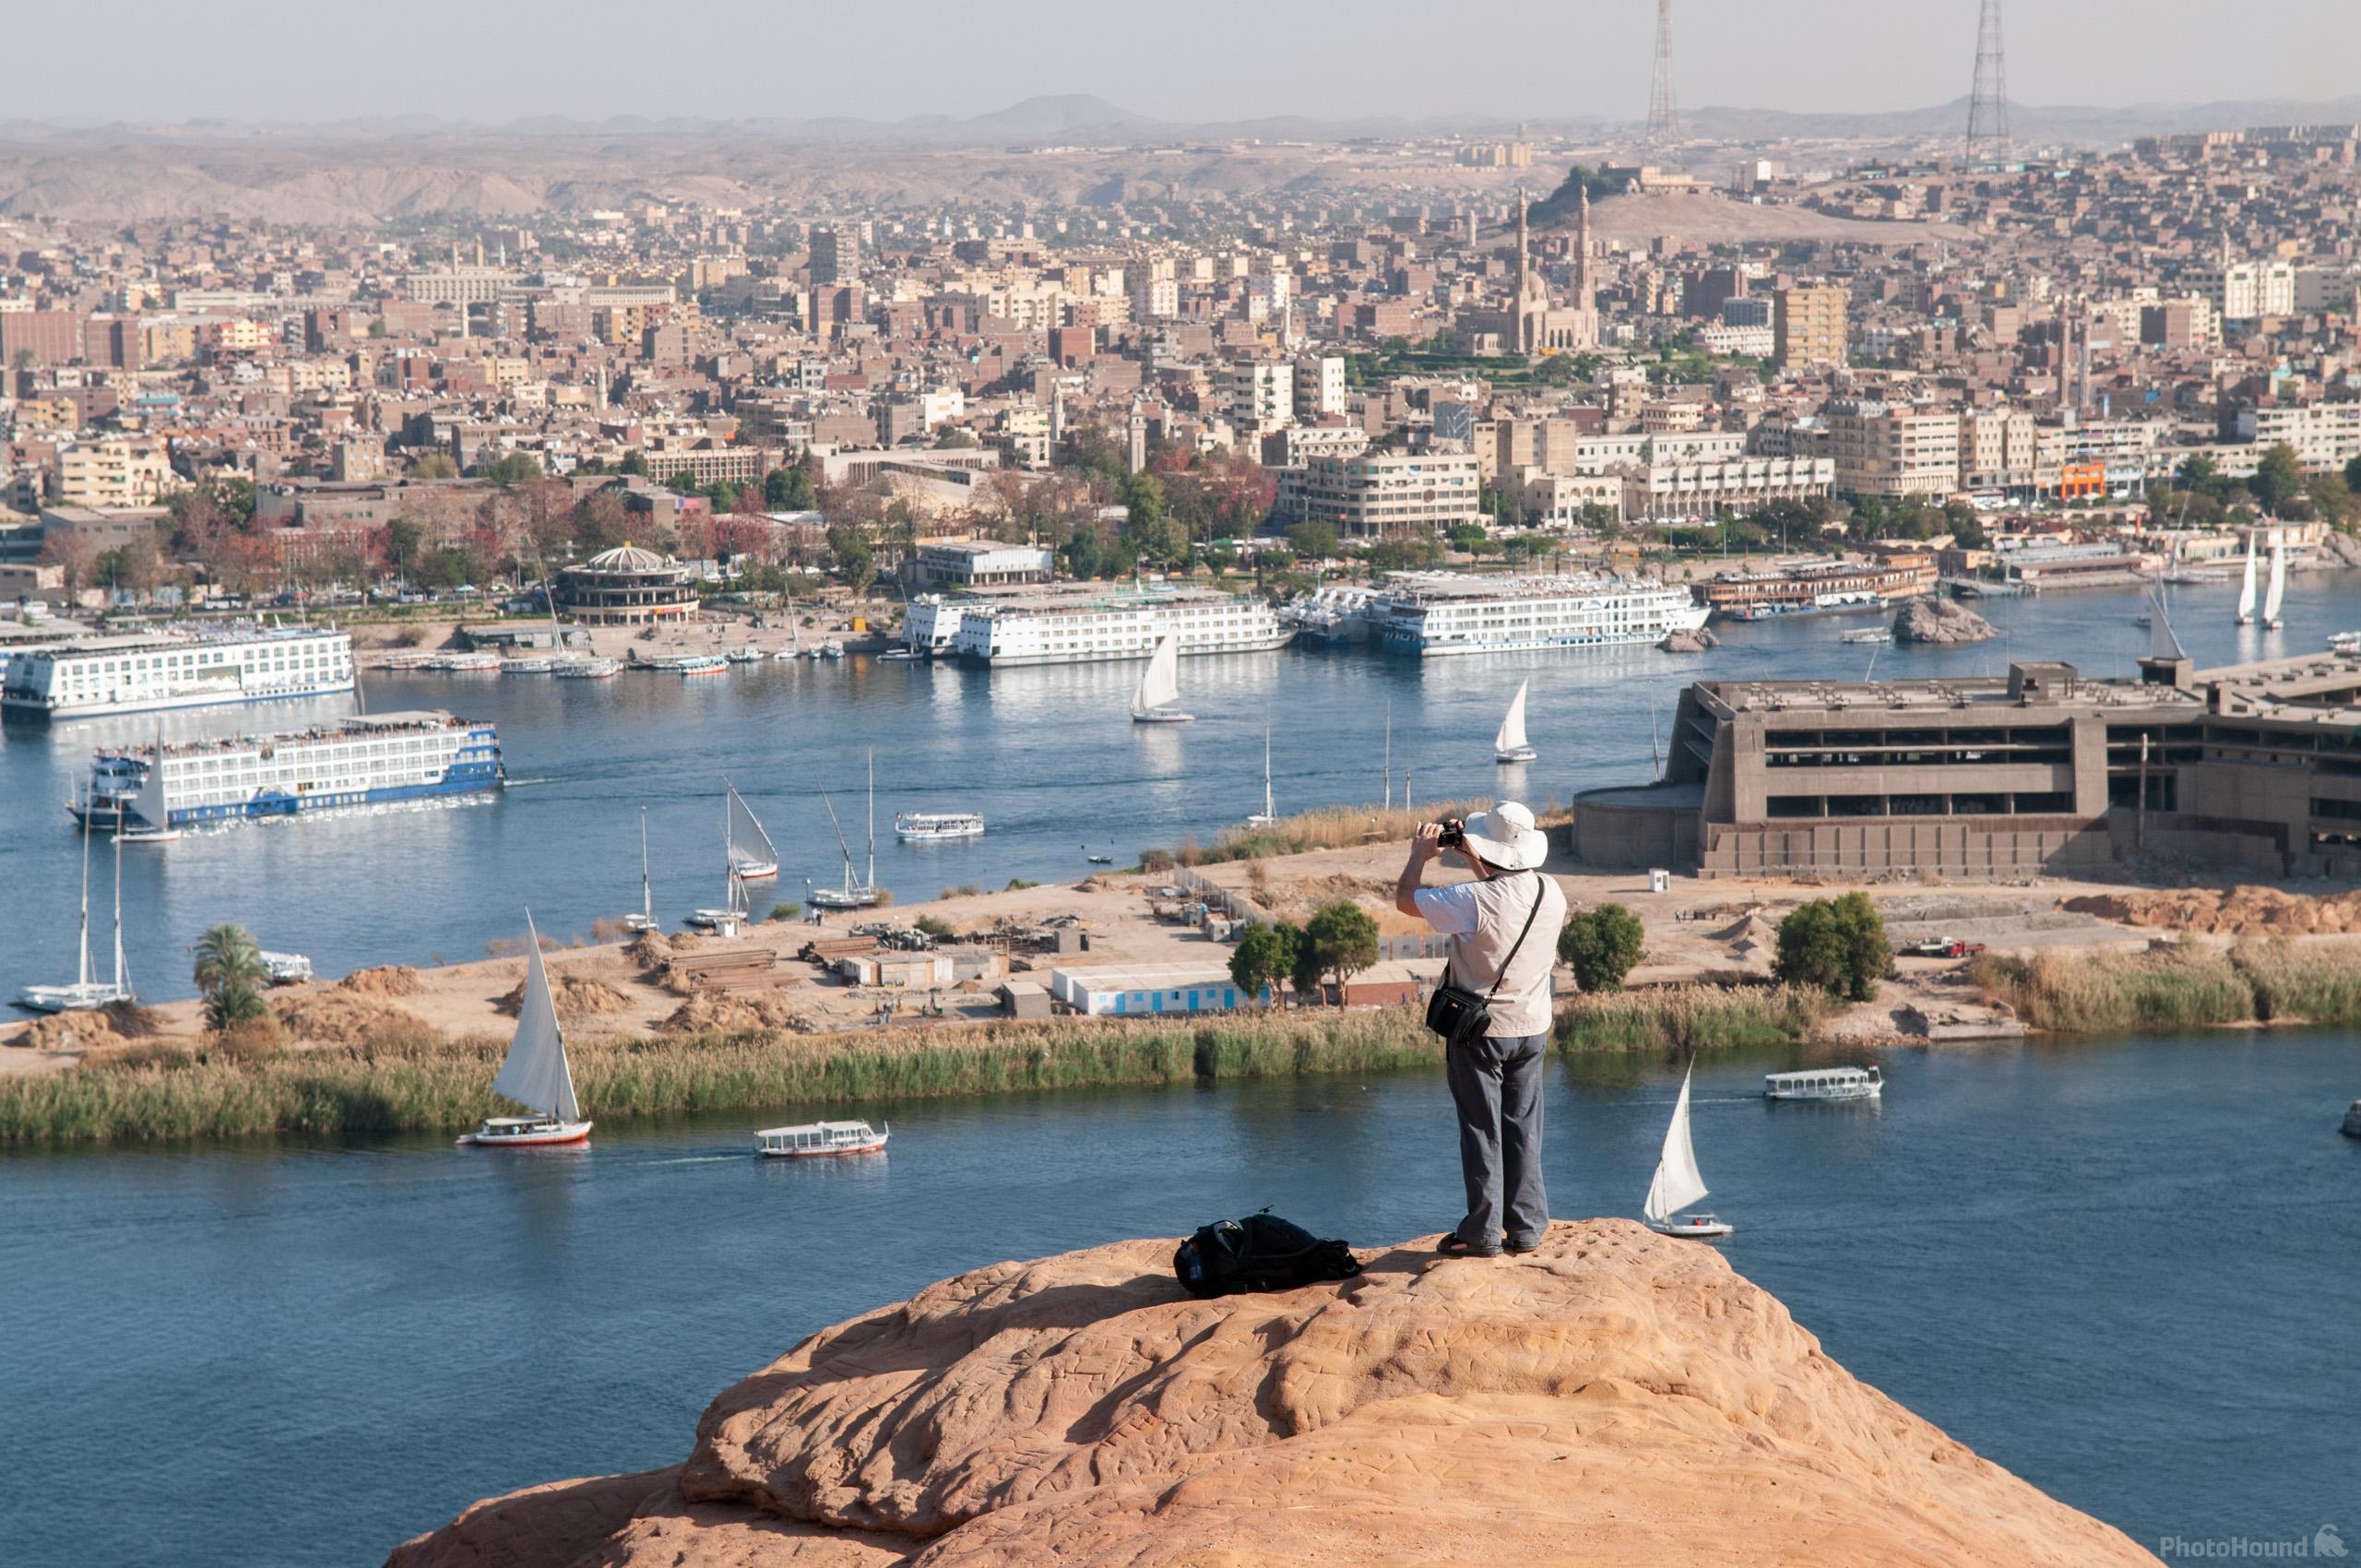 Image of Qubbet el-Hawa Viewpoint by Luka Esenko